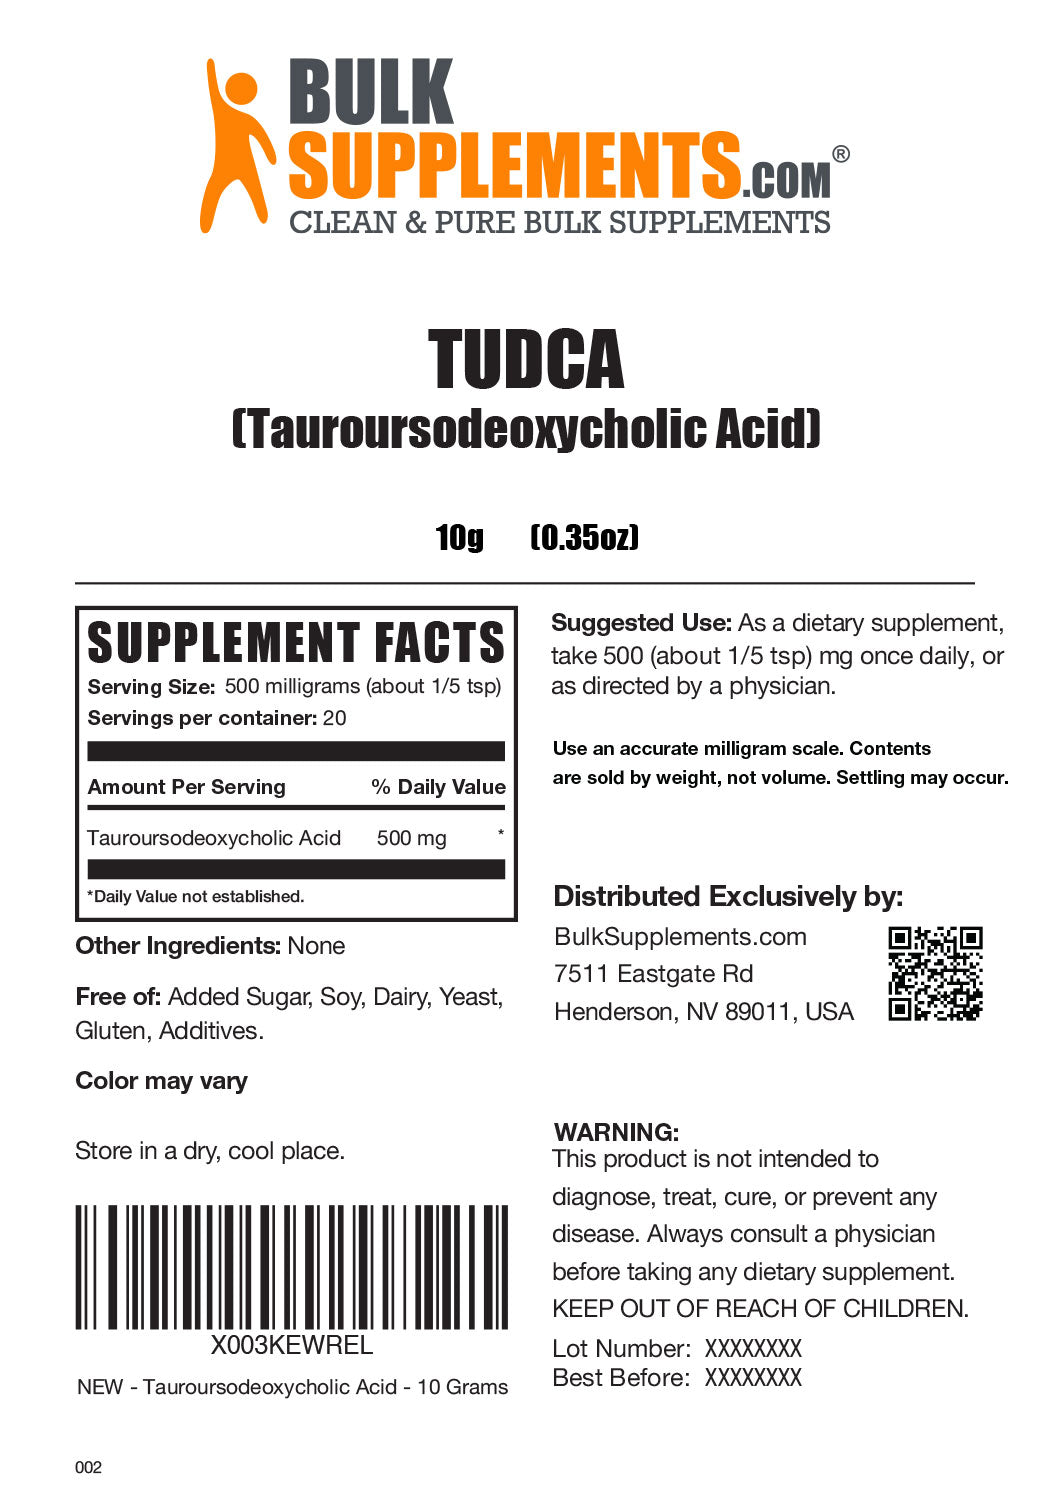 TUDCA powder label 10g